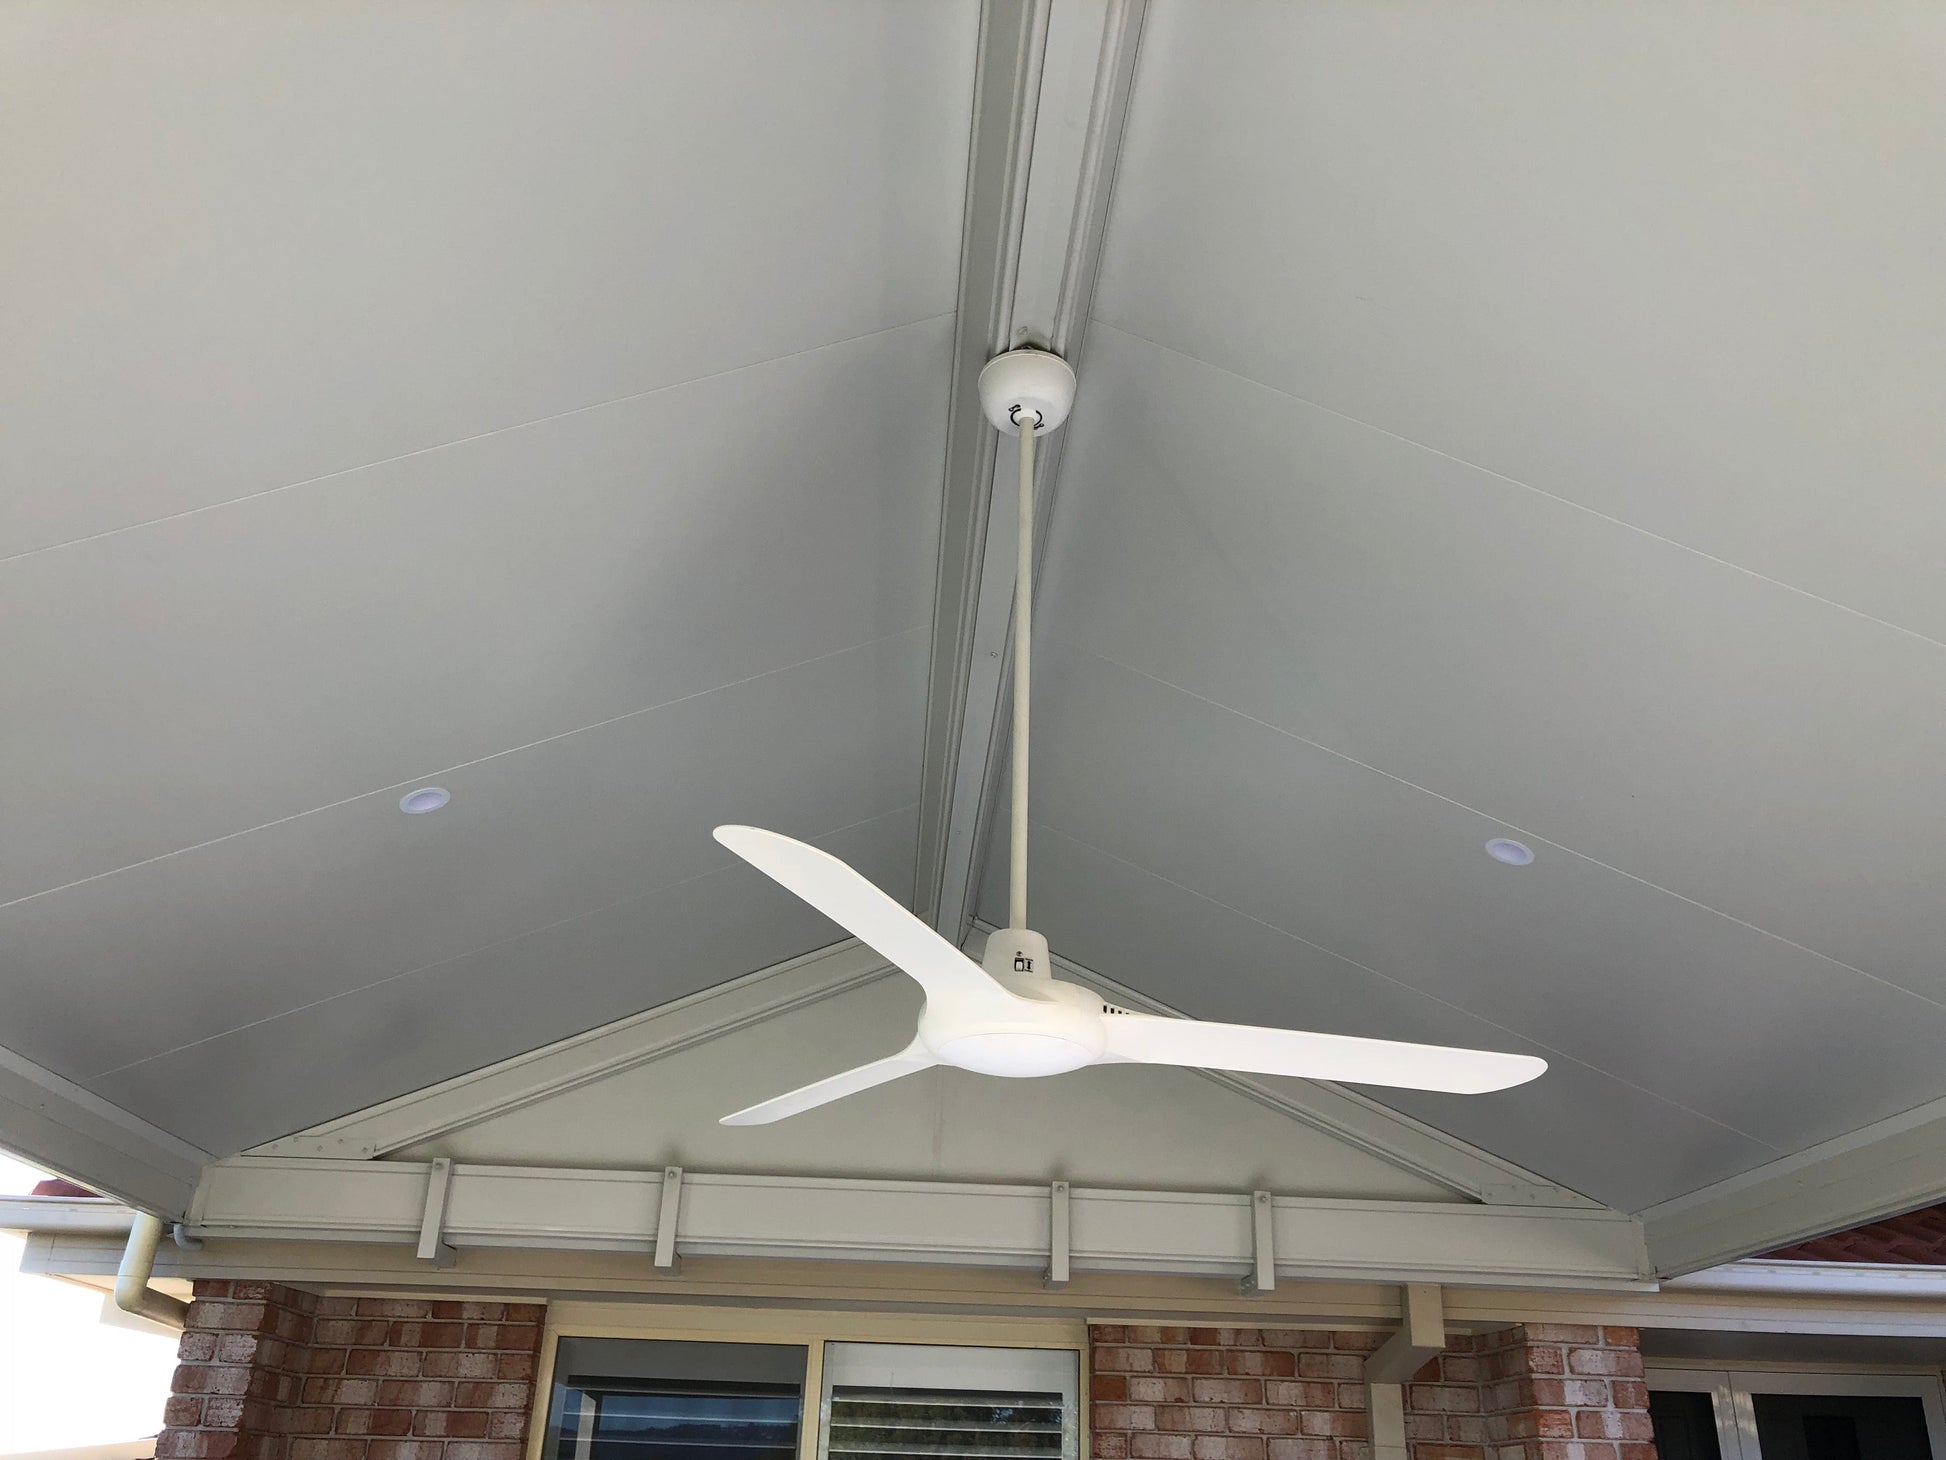 SmartKits Australia Freestanding, Gable Patio Roof- 7m (L) x 4m (W).